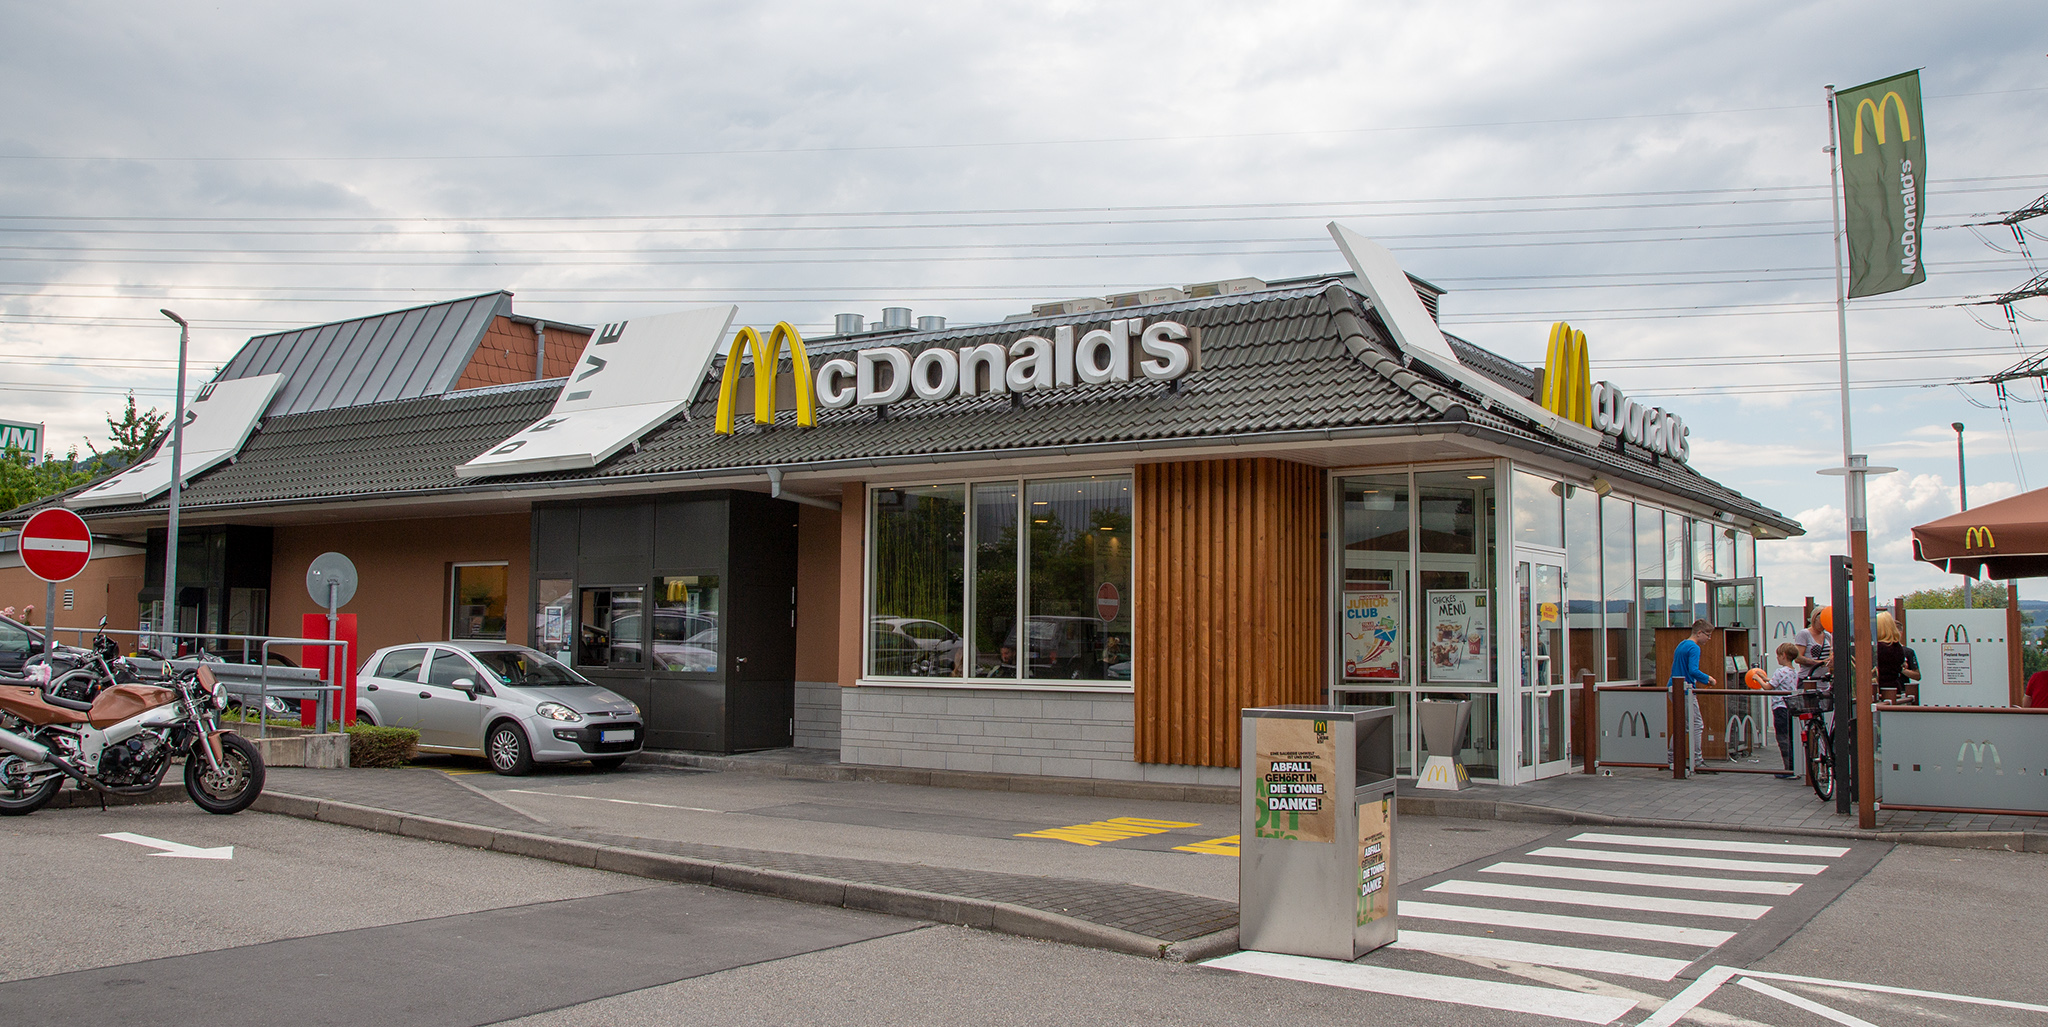 Das McDonald’s-Restaurant in Mosbach